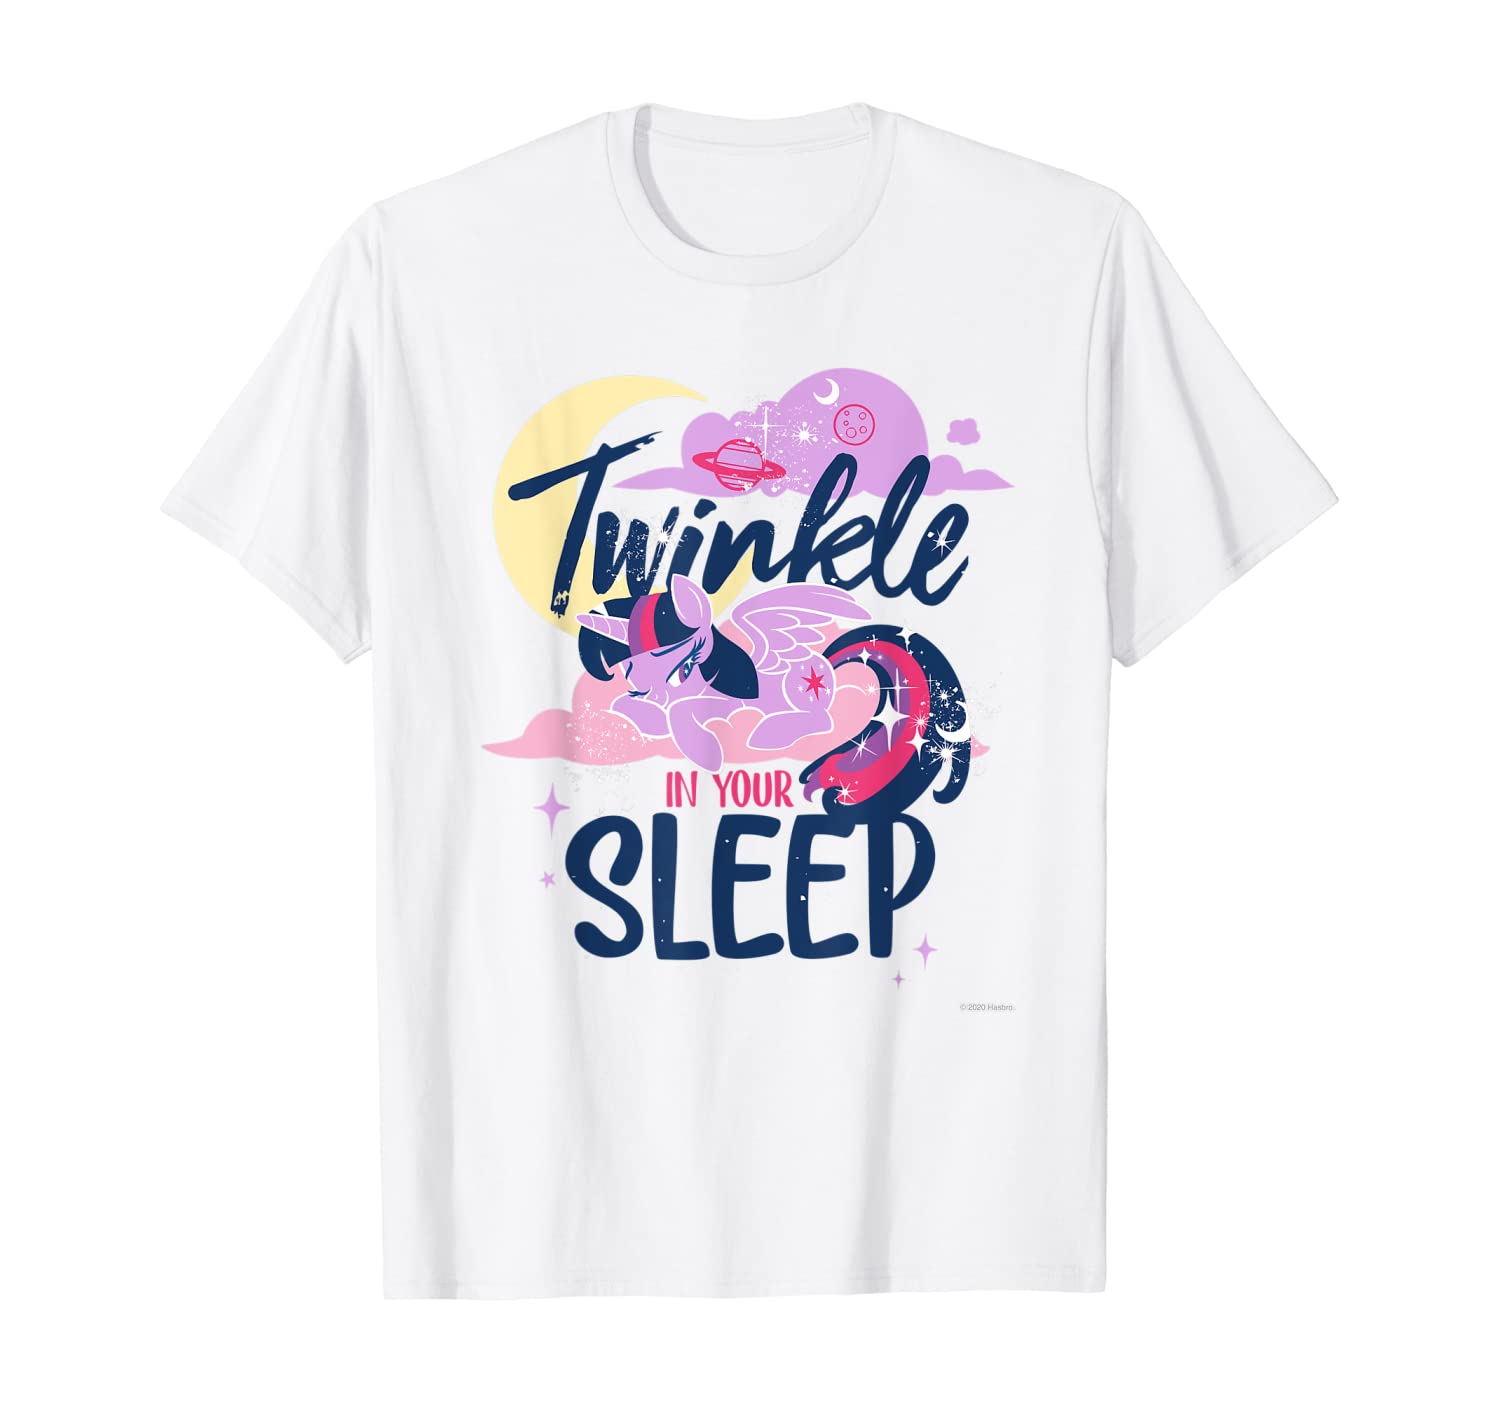 ＜Amazon限定販売＞マイリトルポニー トワイライトスパークル"Twinkle Sleep"